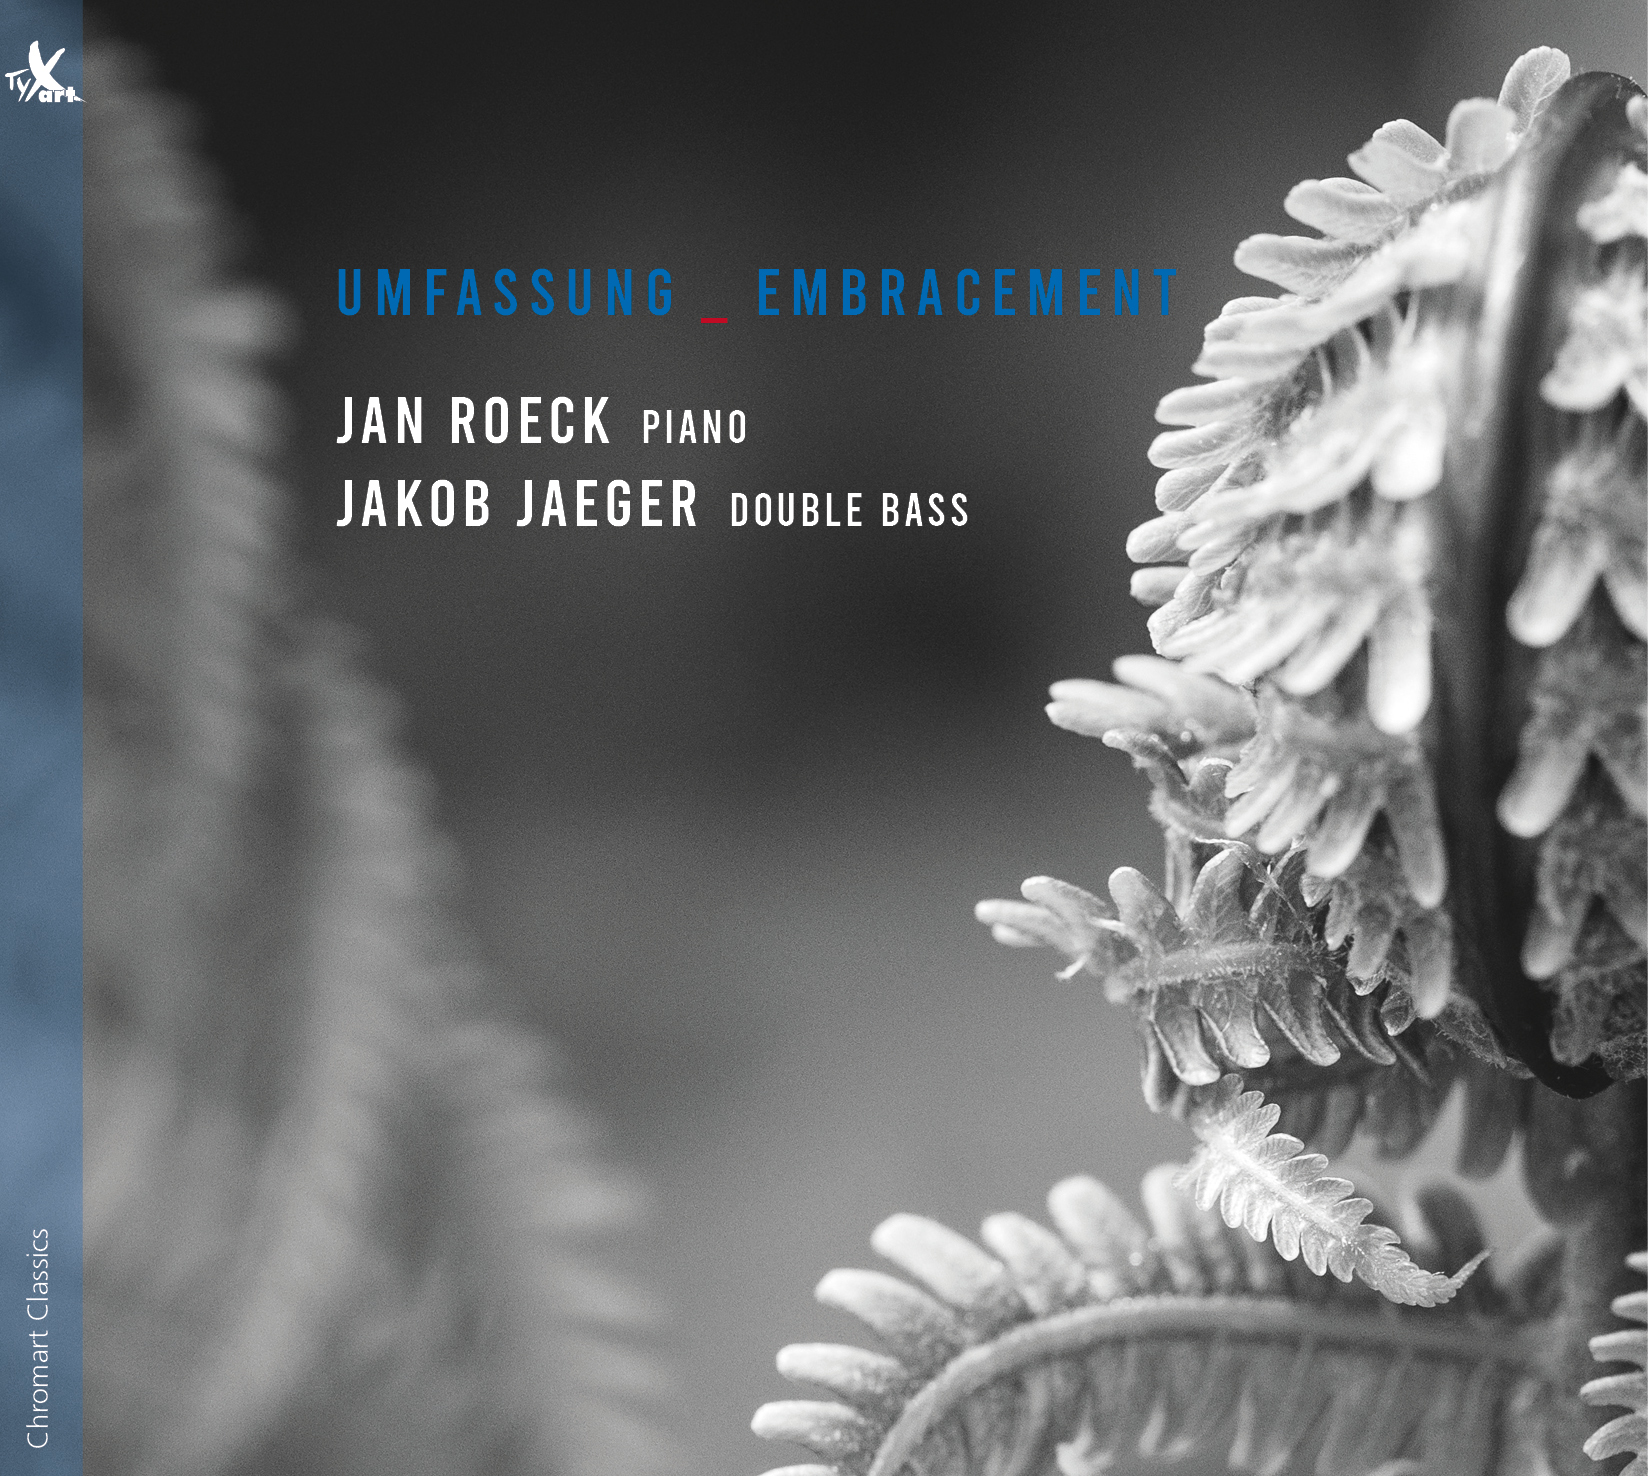 Embracement _ Umfassung - Jan Roeck, Piano - Jakob Jaeger, Double Bass